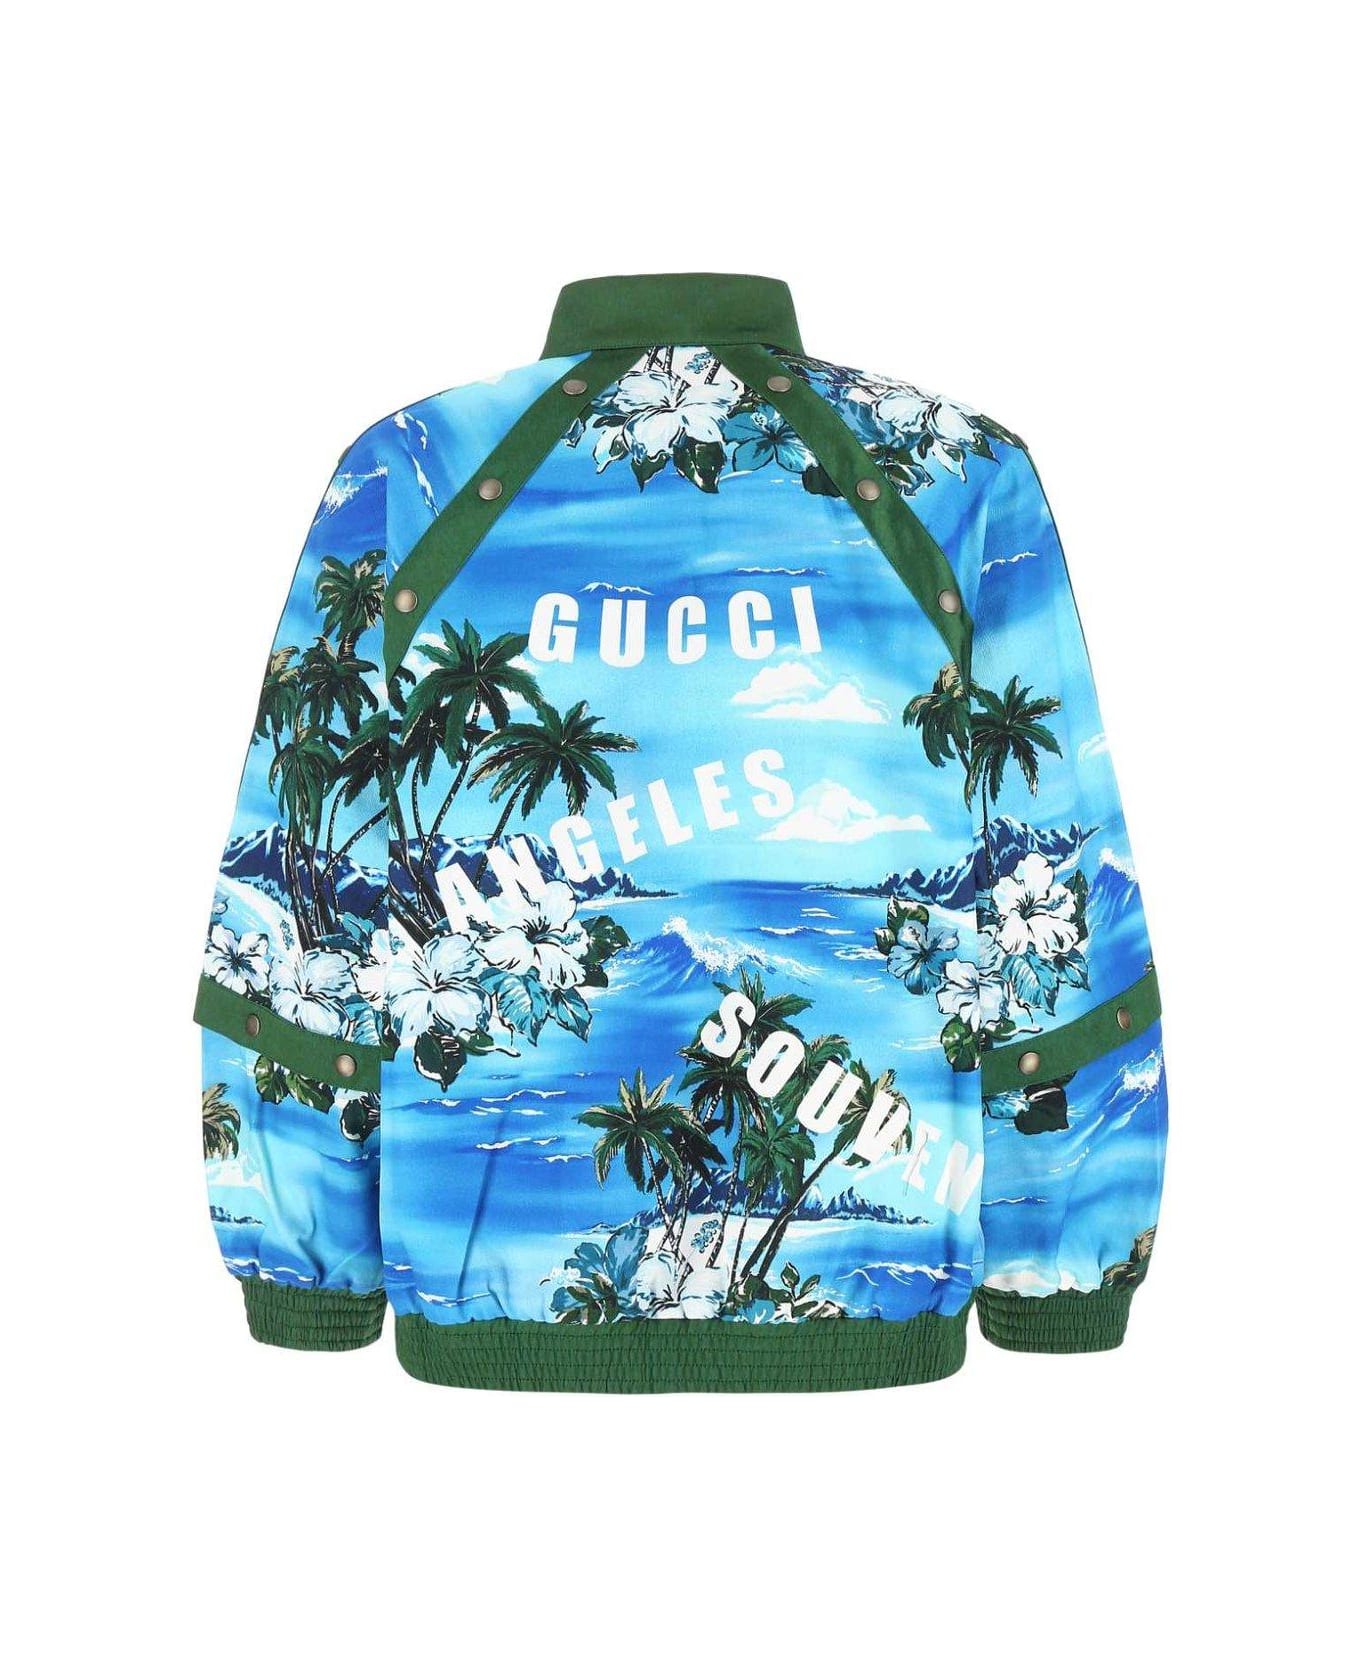 Gucci Graphic Printed Long-sleeved Jacket - Blu/Verde